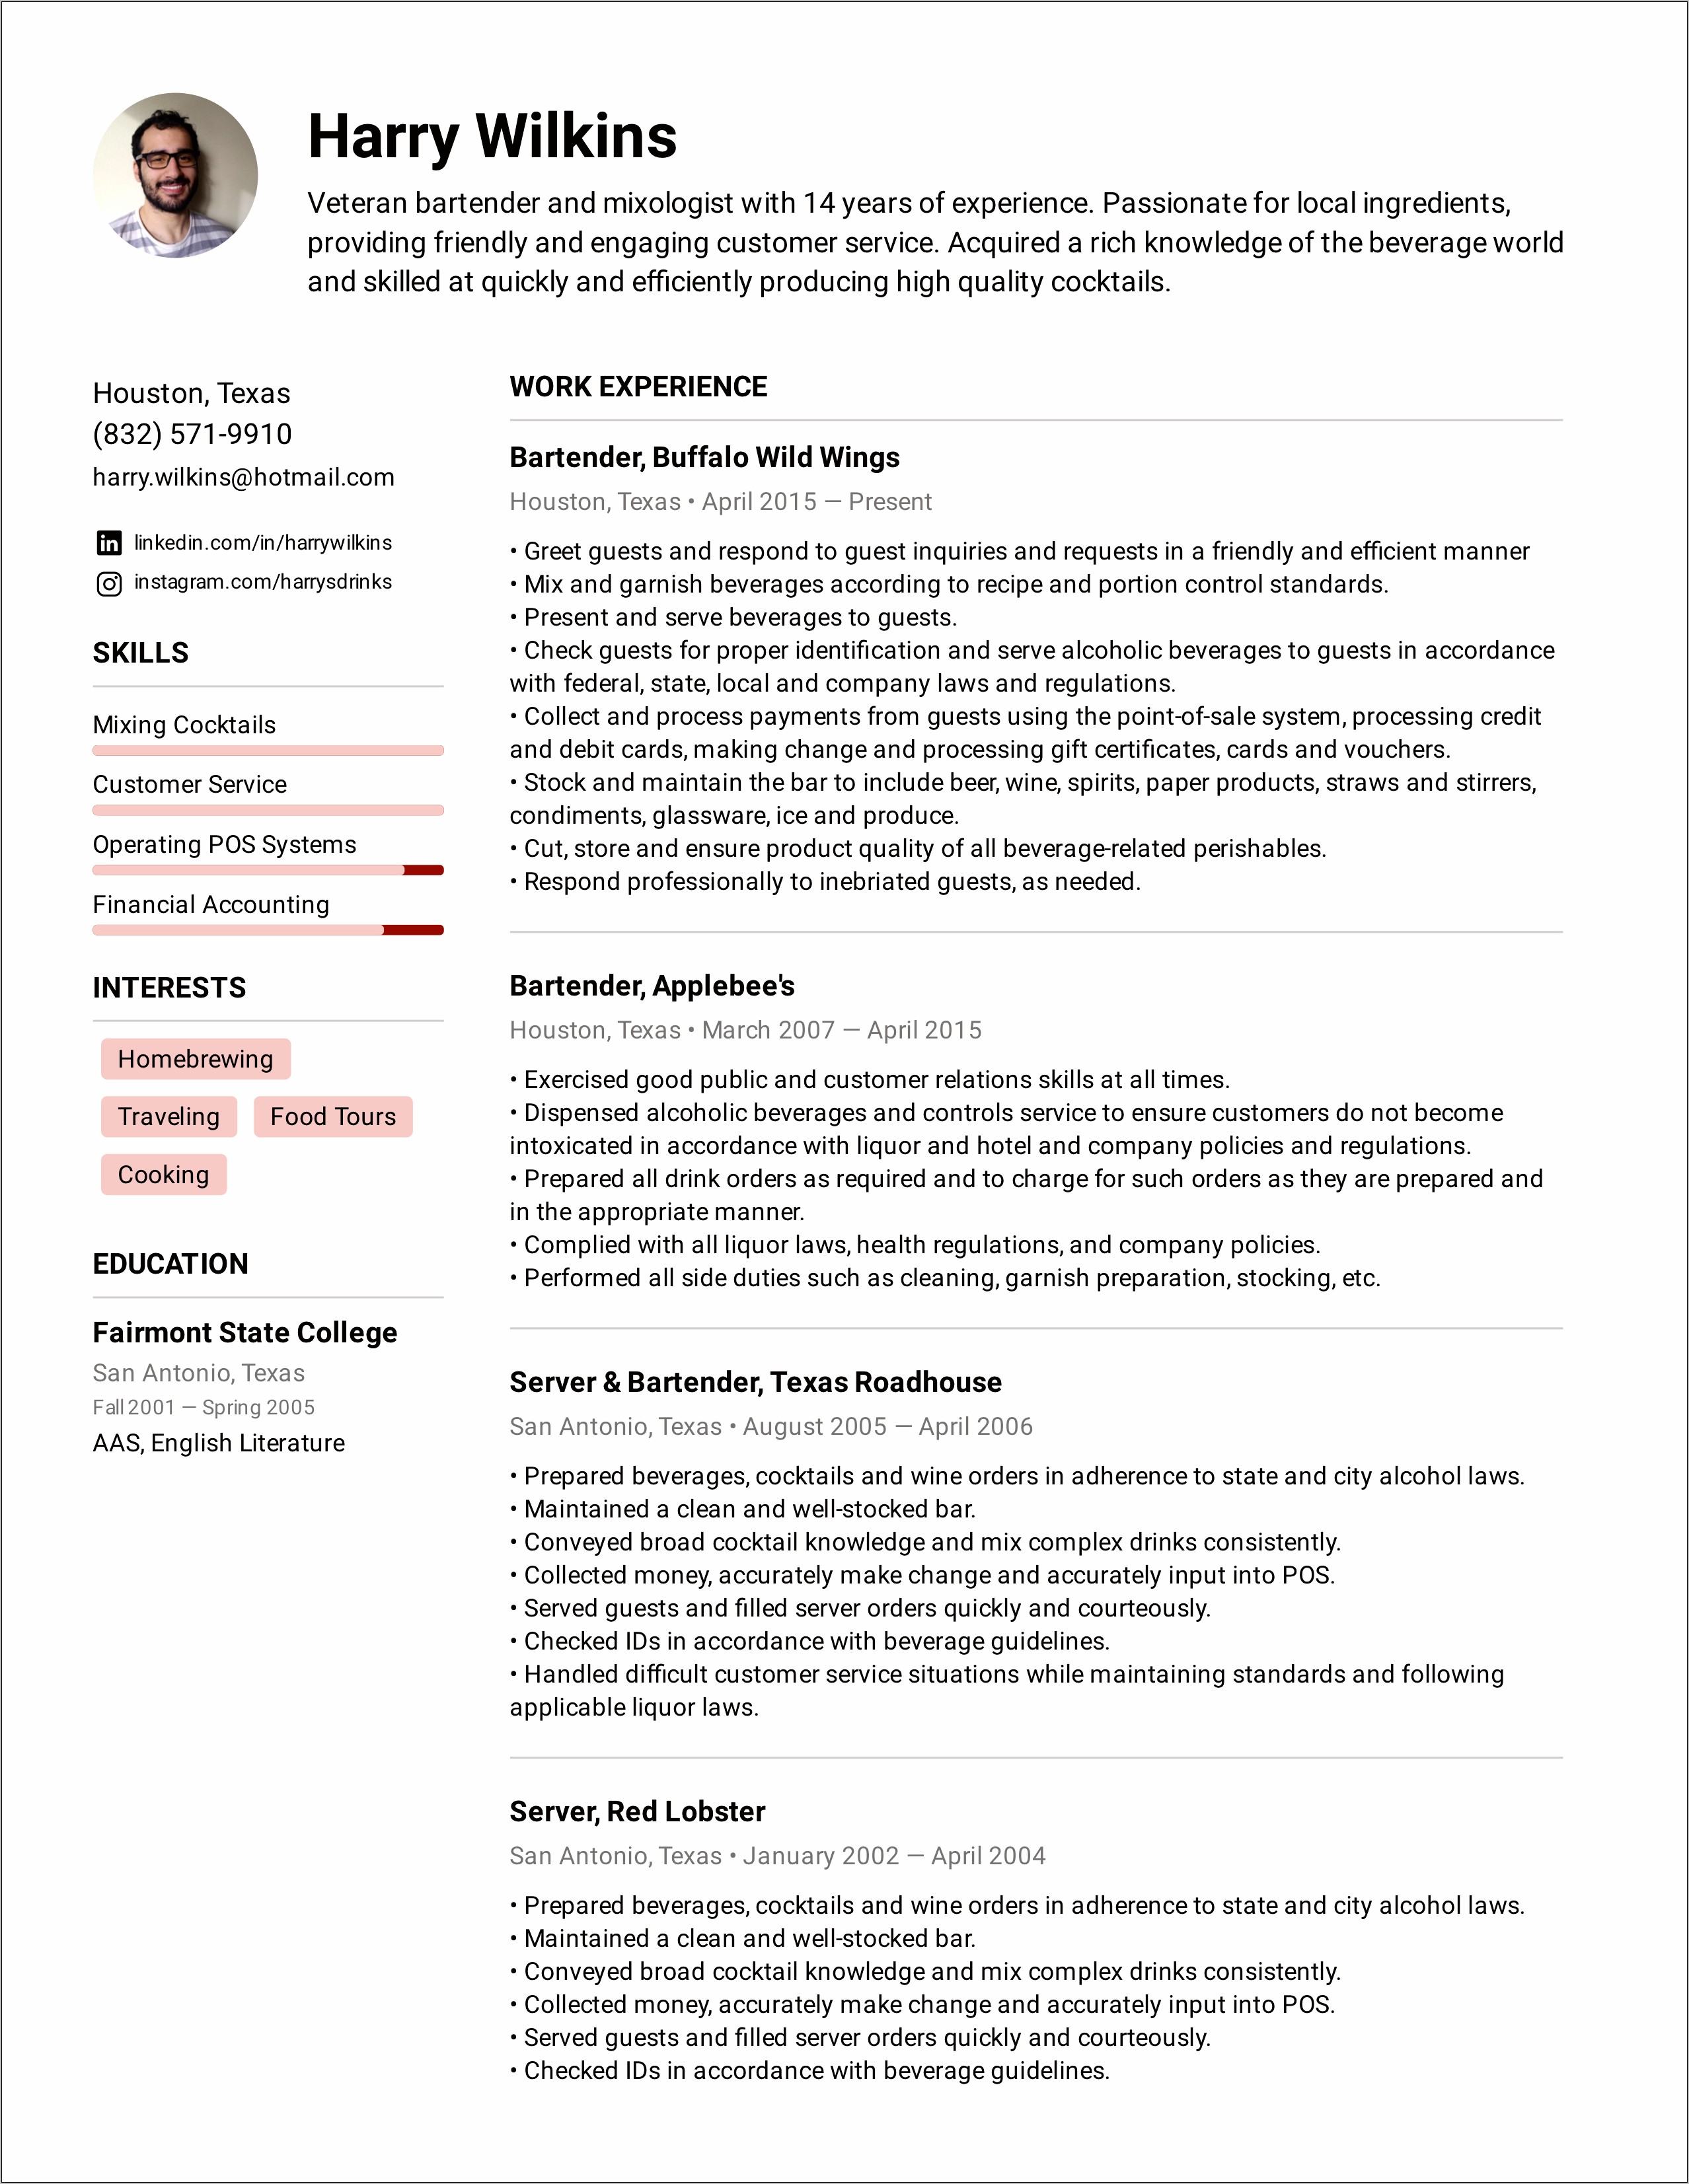 Sample Objectives For Resume Linkedin